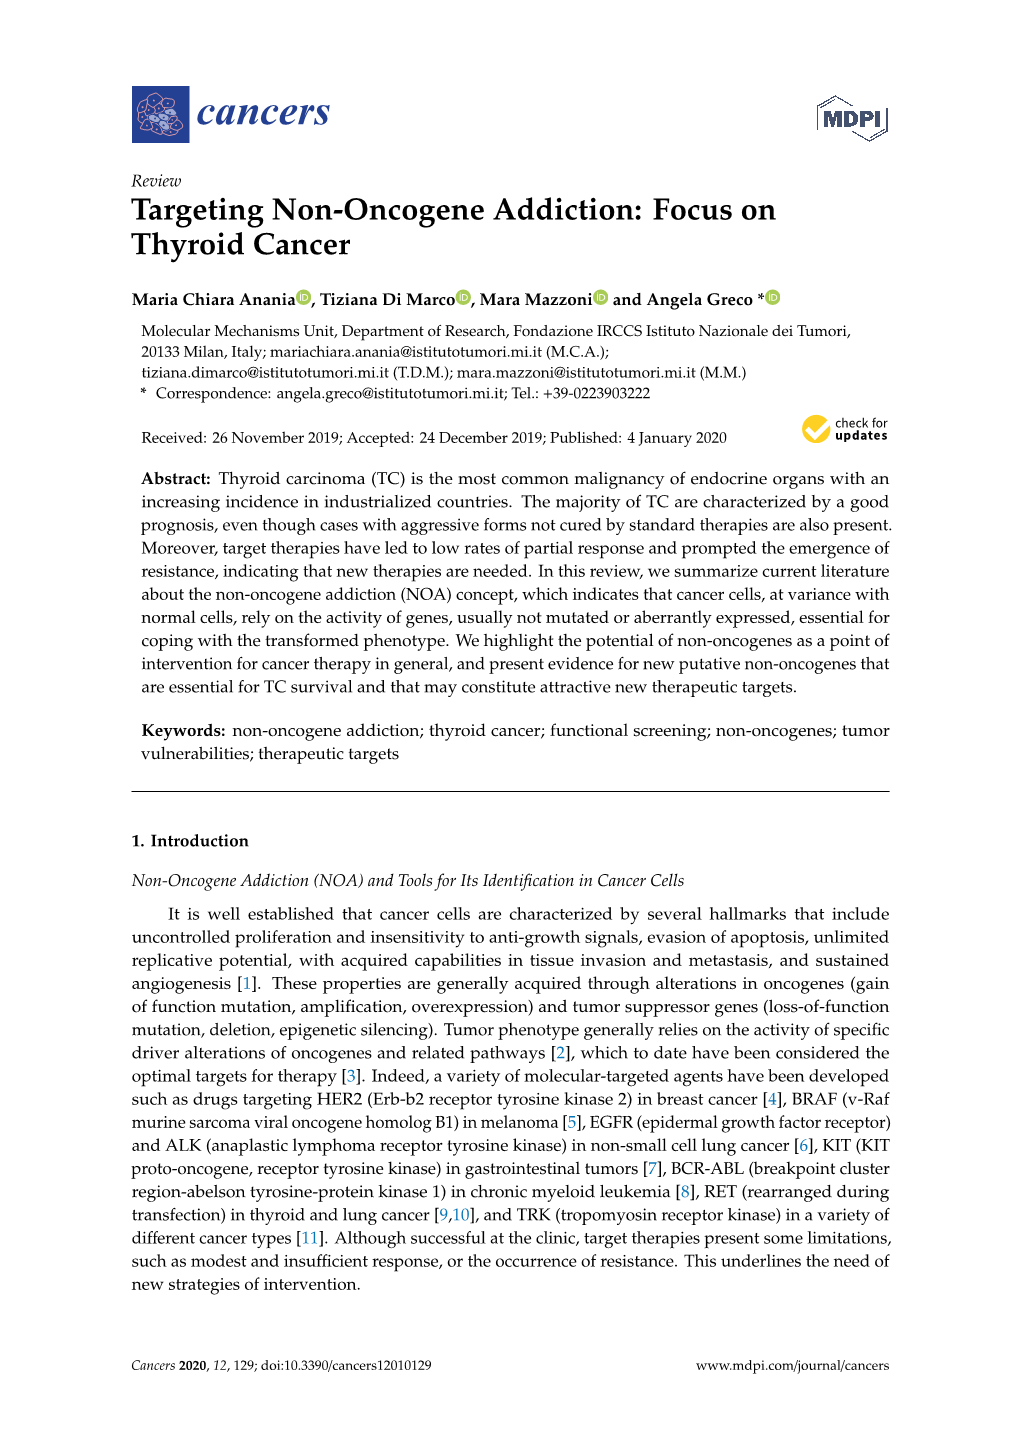 Targeting Non-Oncogene Addiction: Focus on Thyroid Cancer